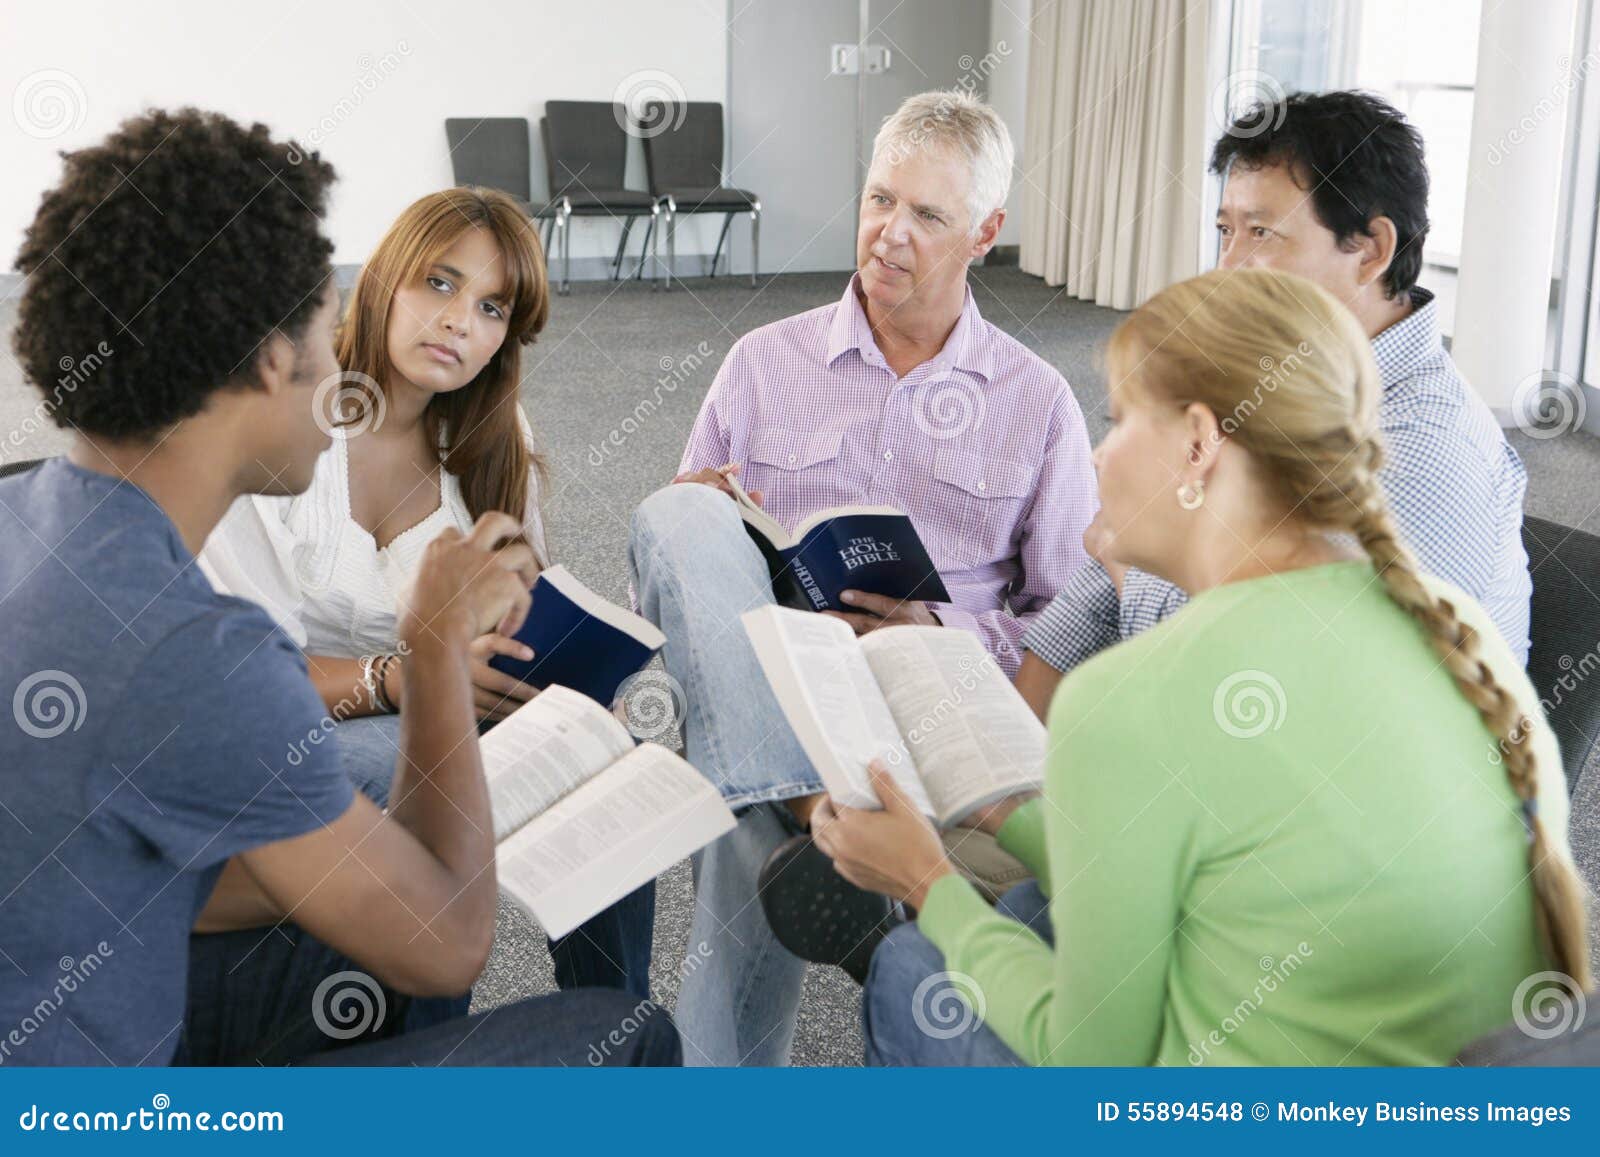 meeting of bible study group